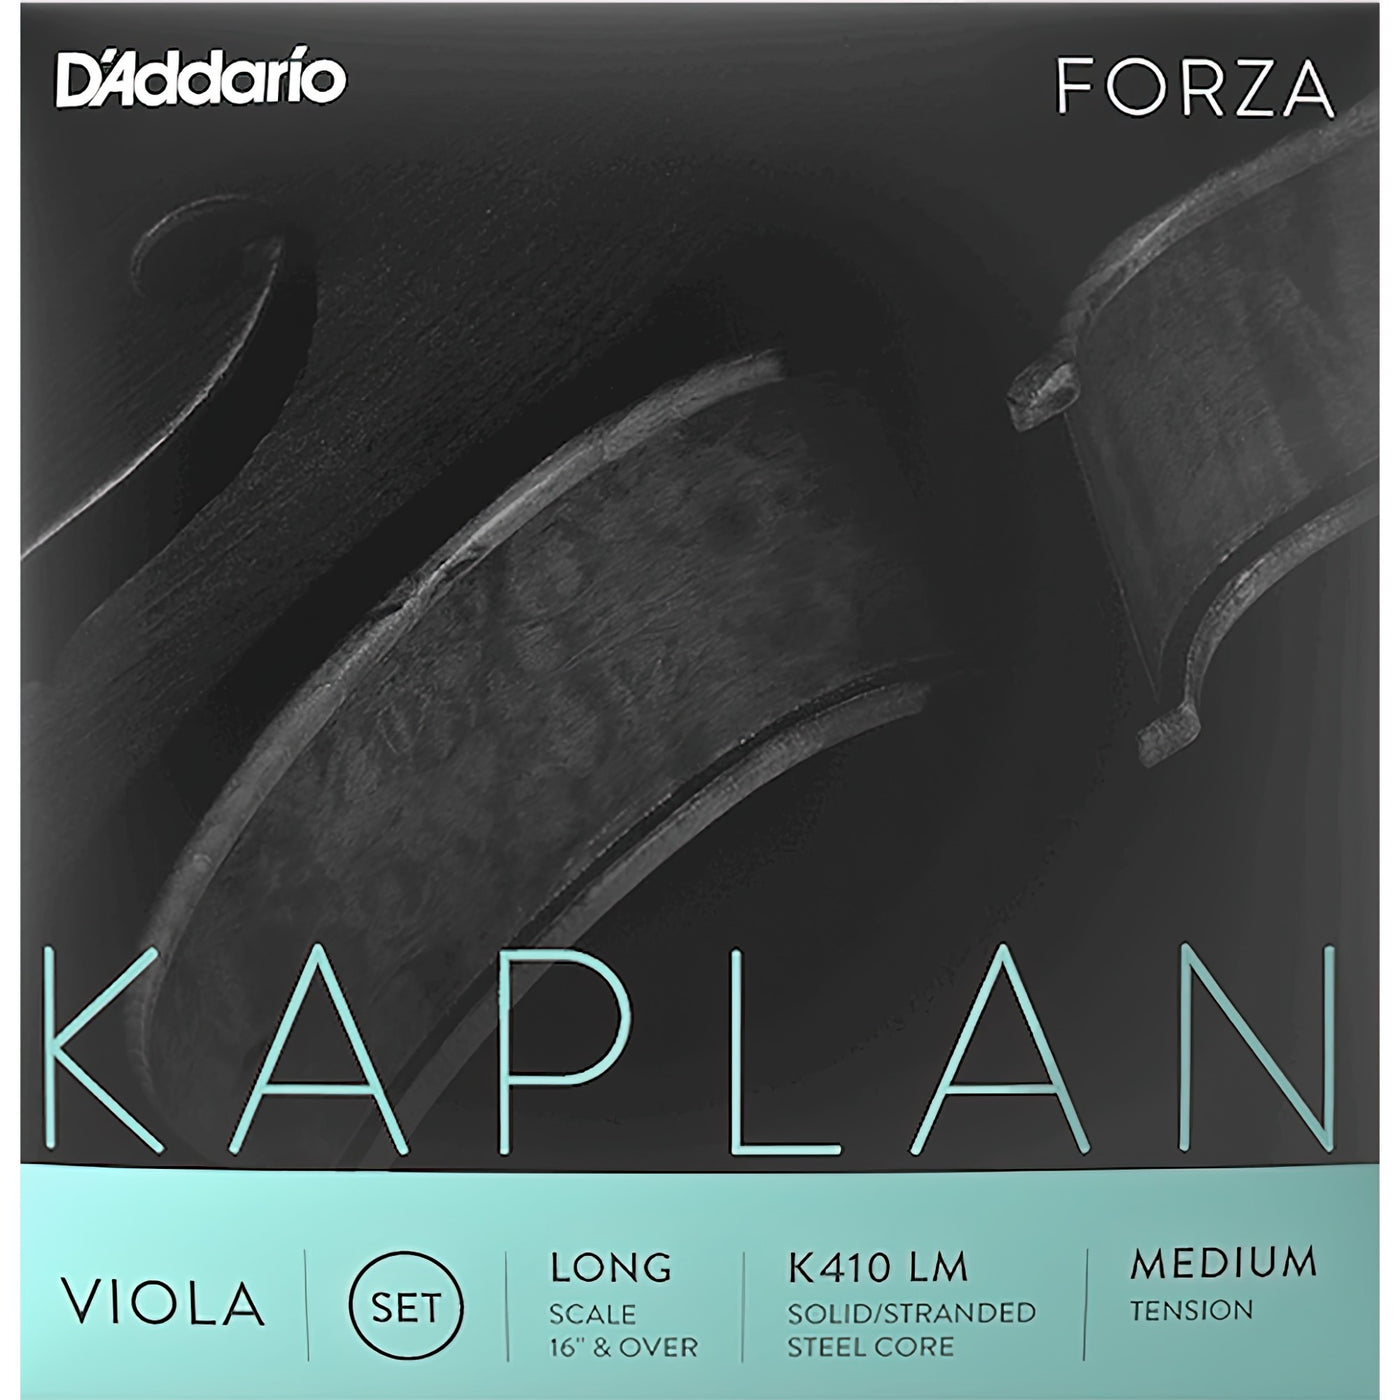 D'Addario K410 Kaplan Forza Viola String Set, Long Size (K410 LM)